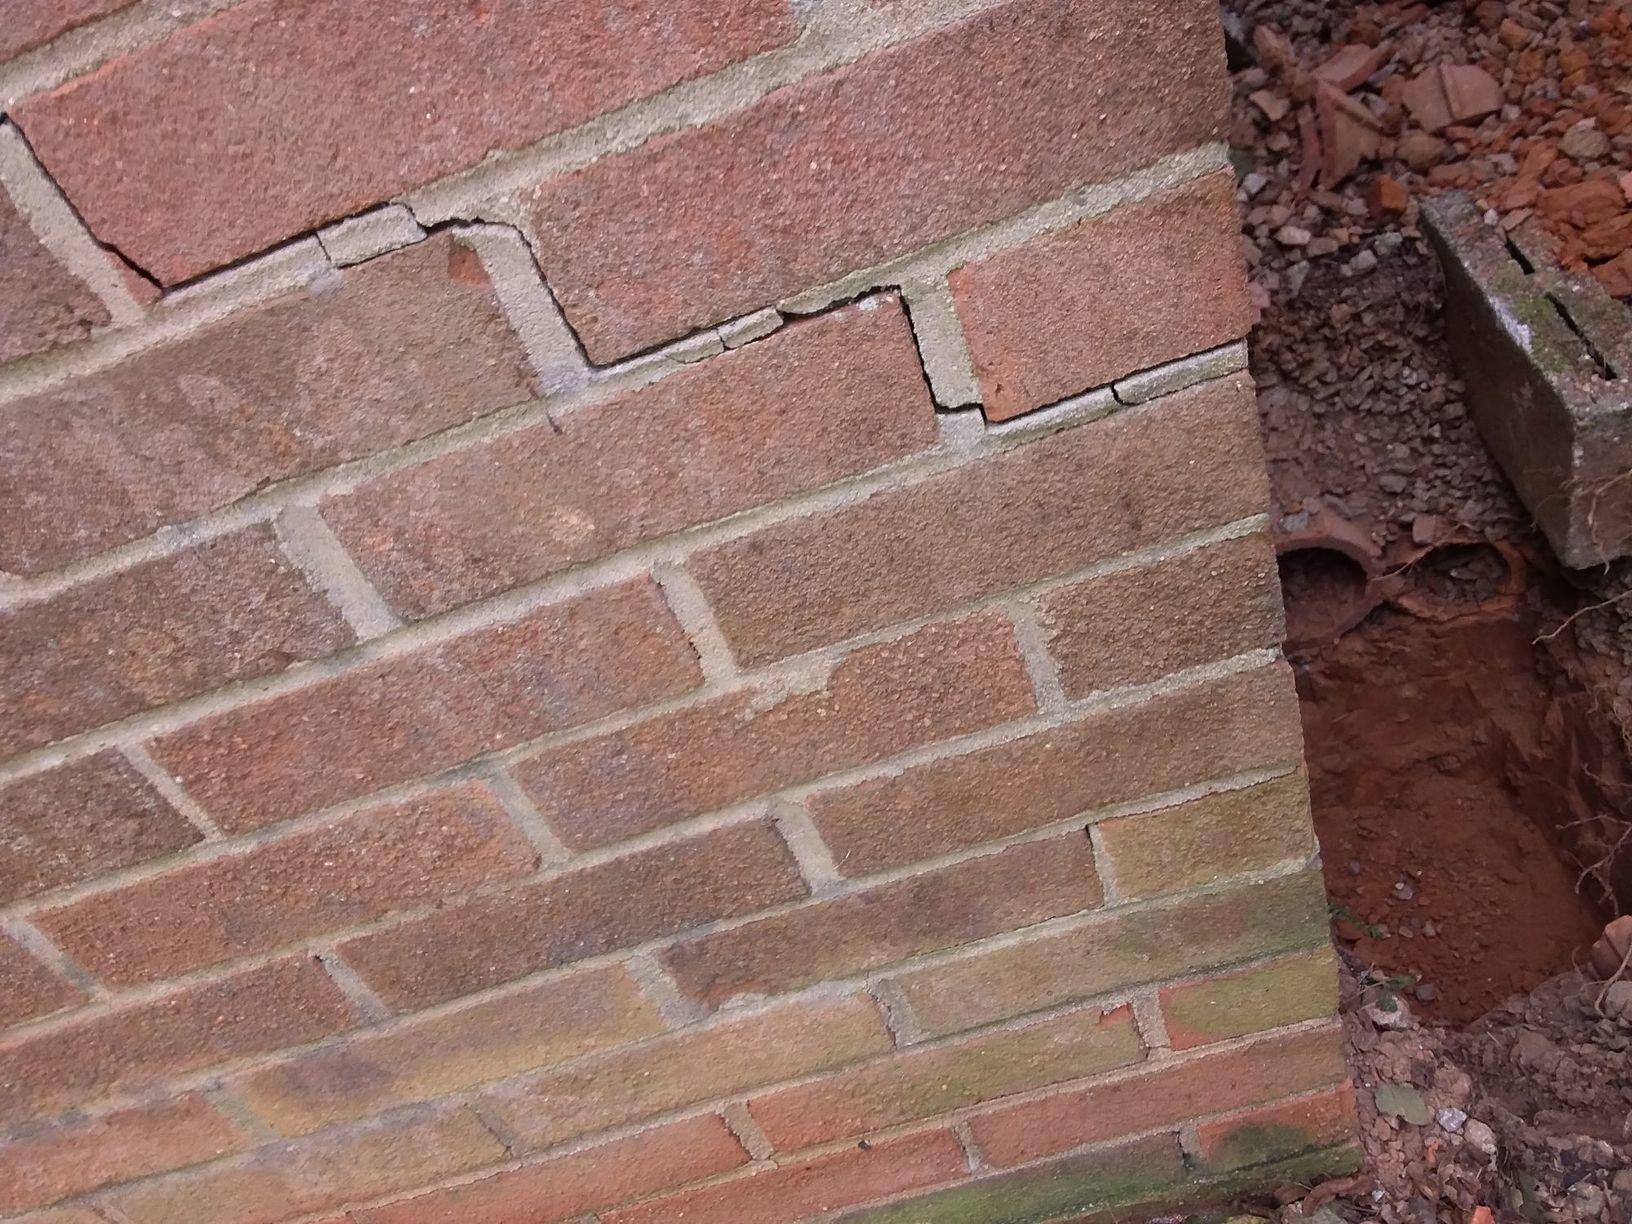 Cracks in foundation basement wall